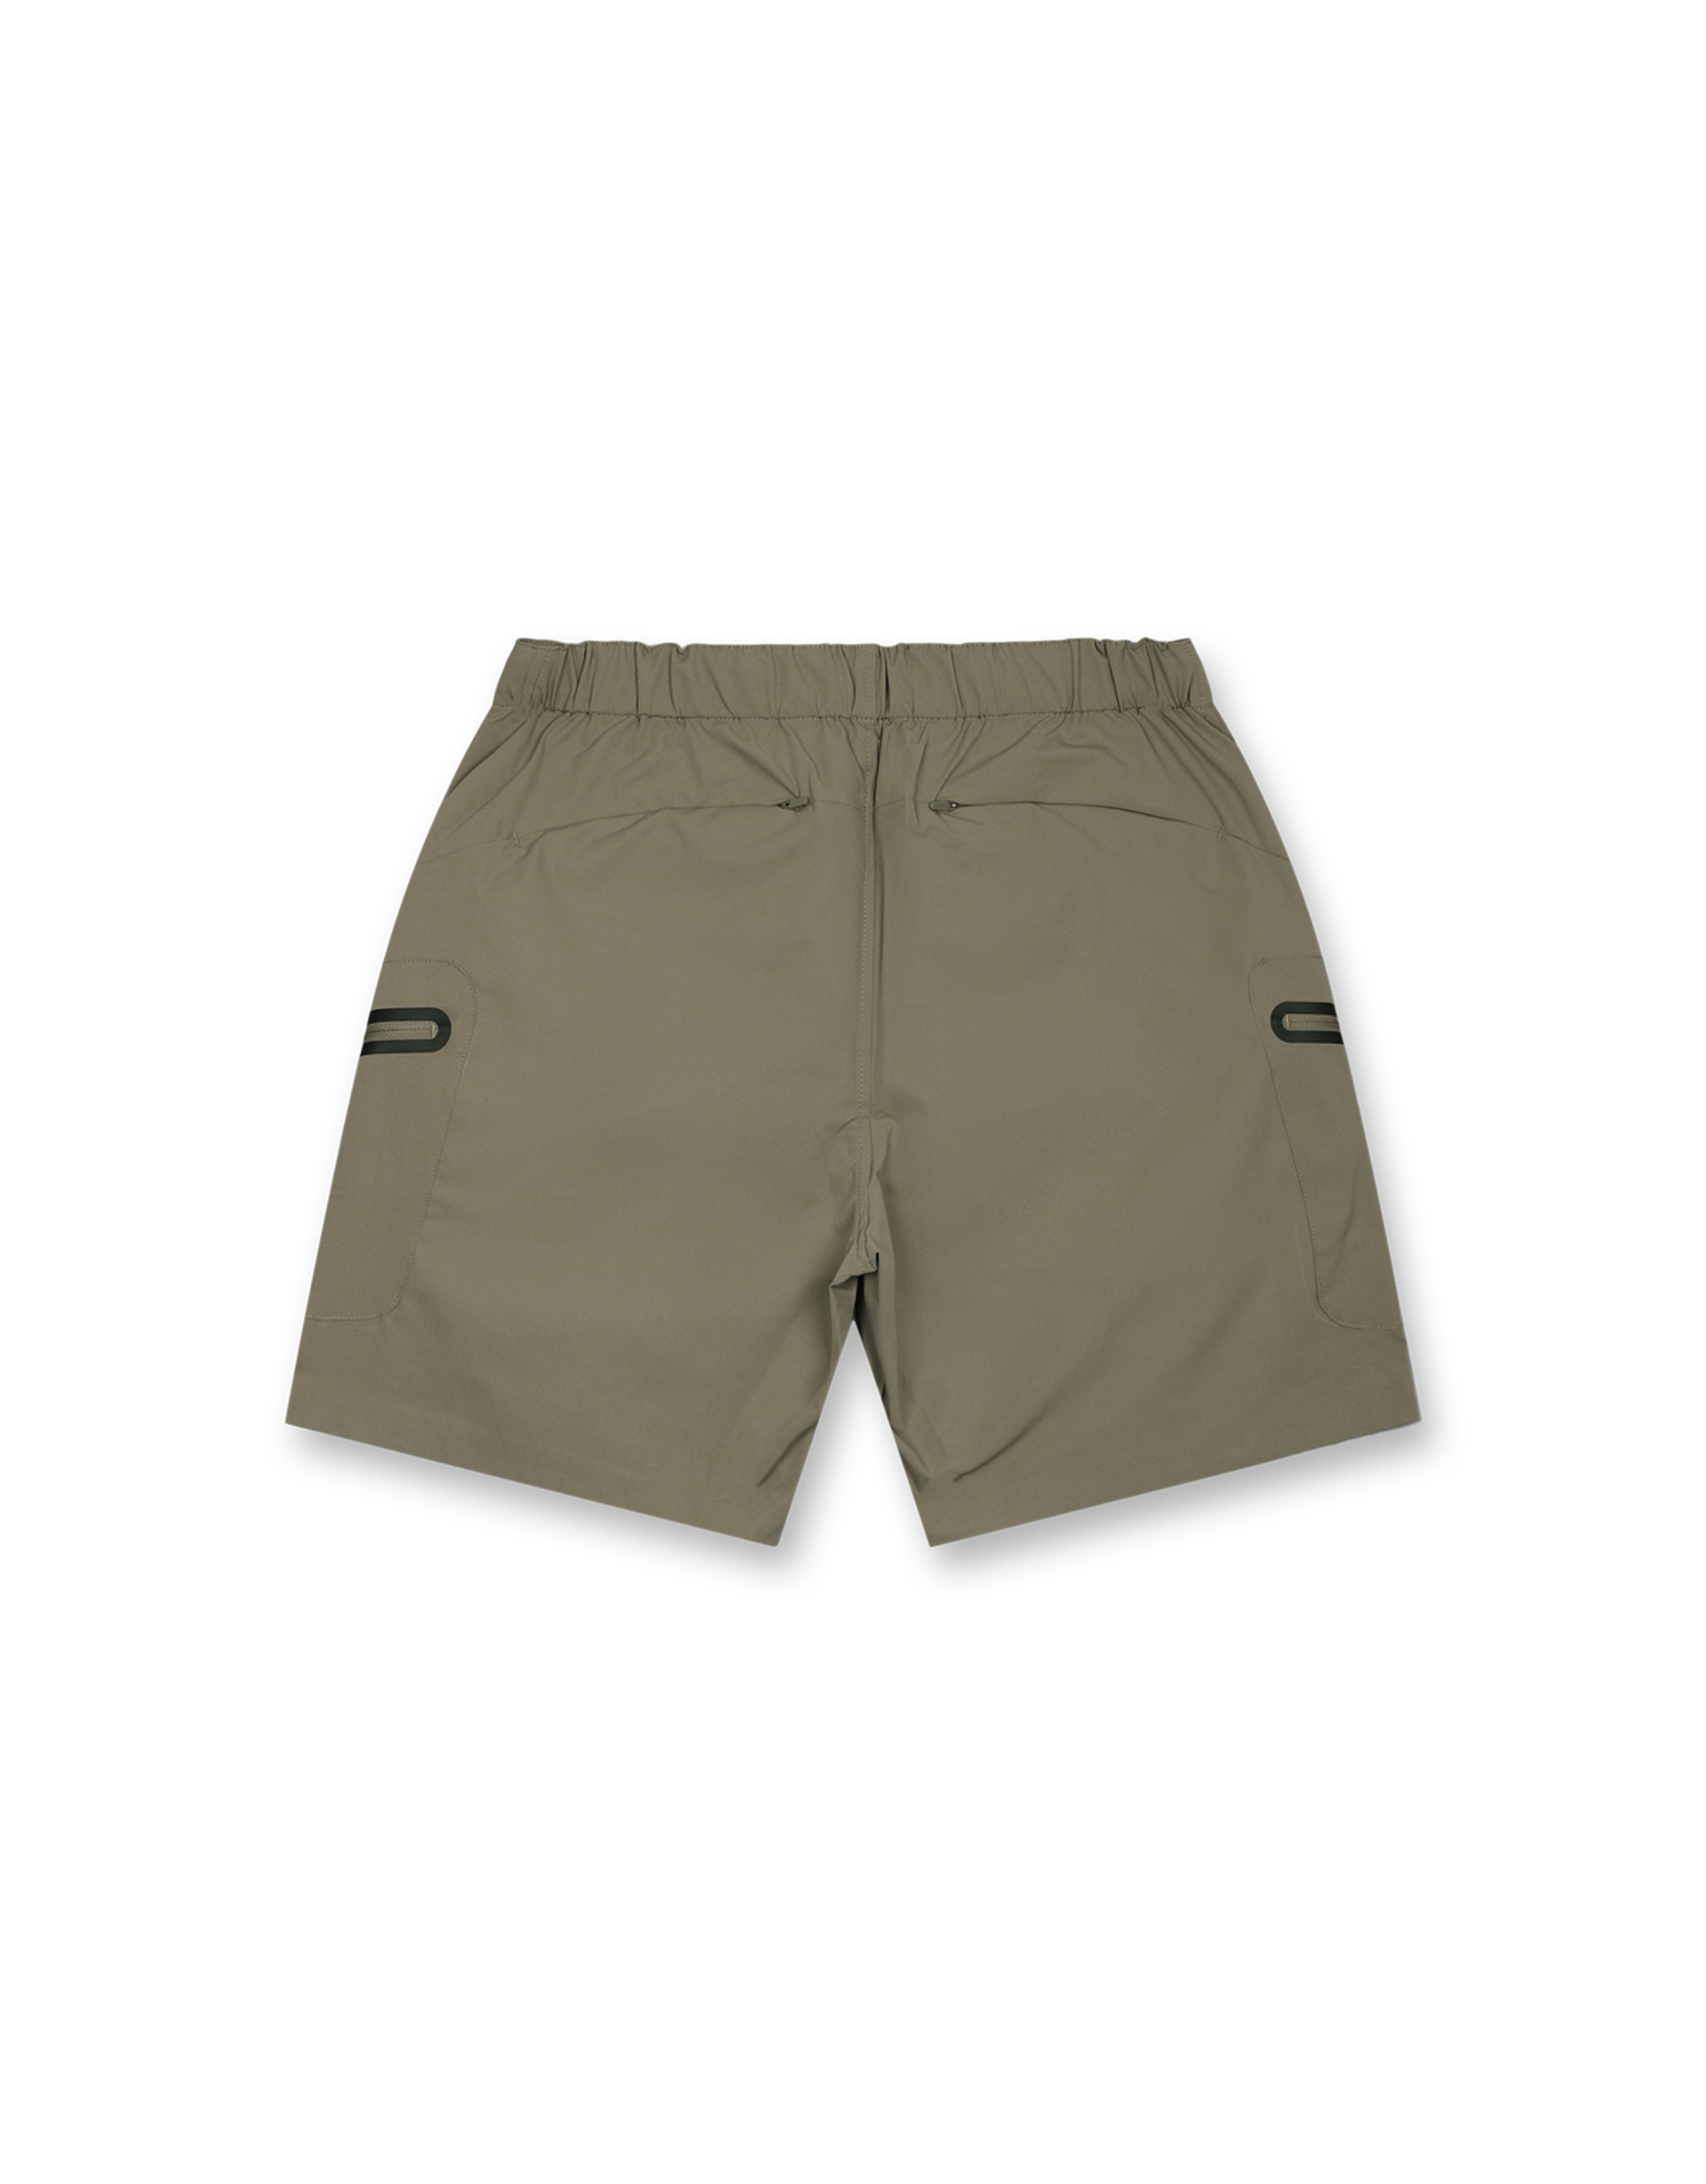 Pico Shorts